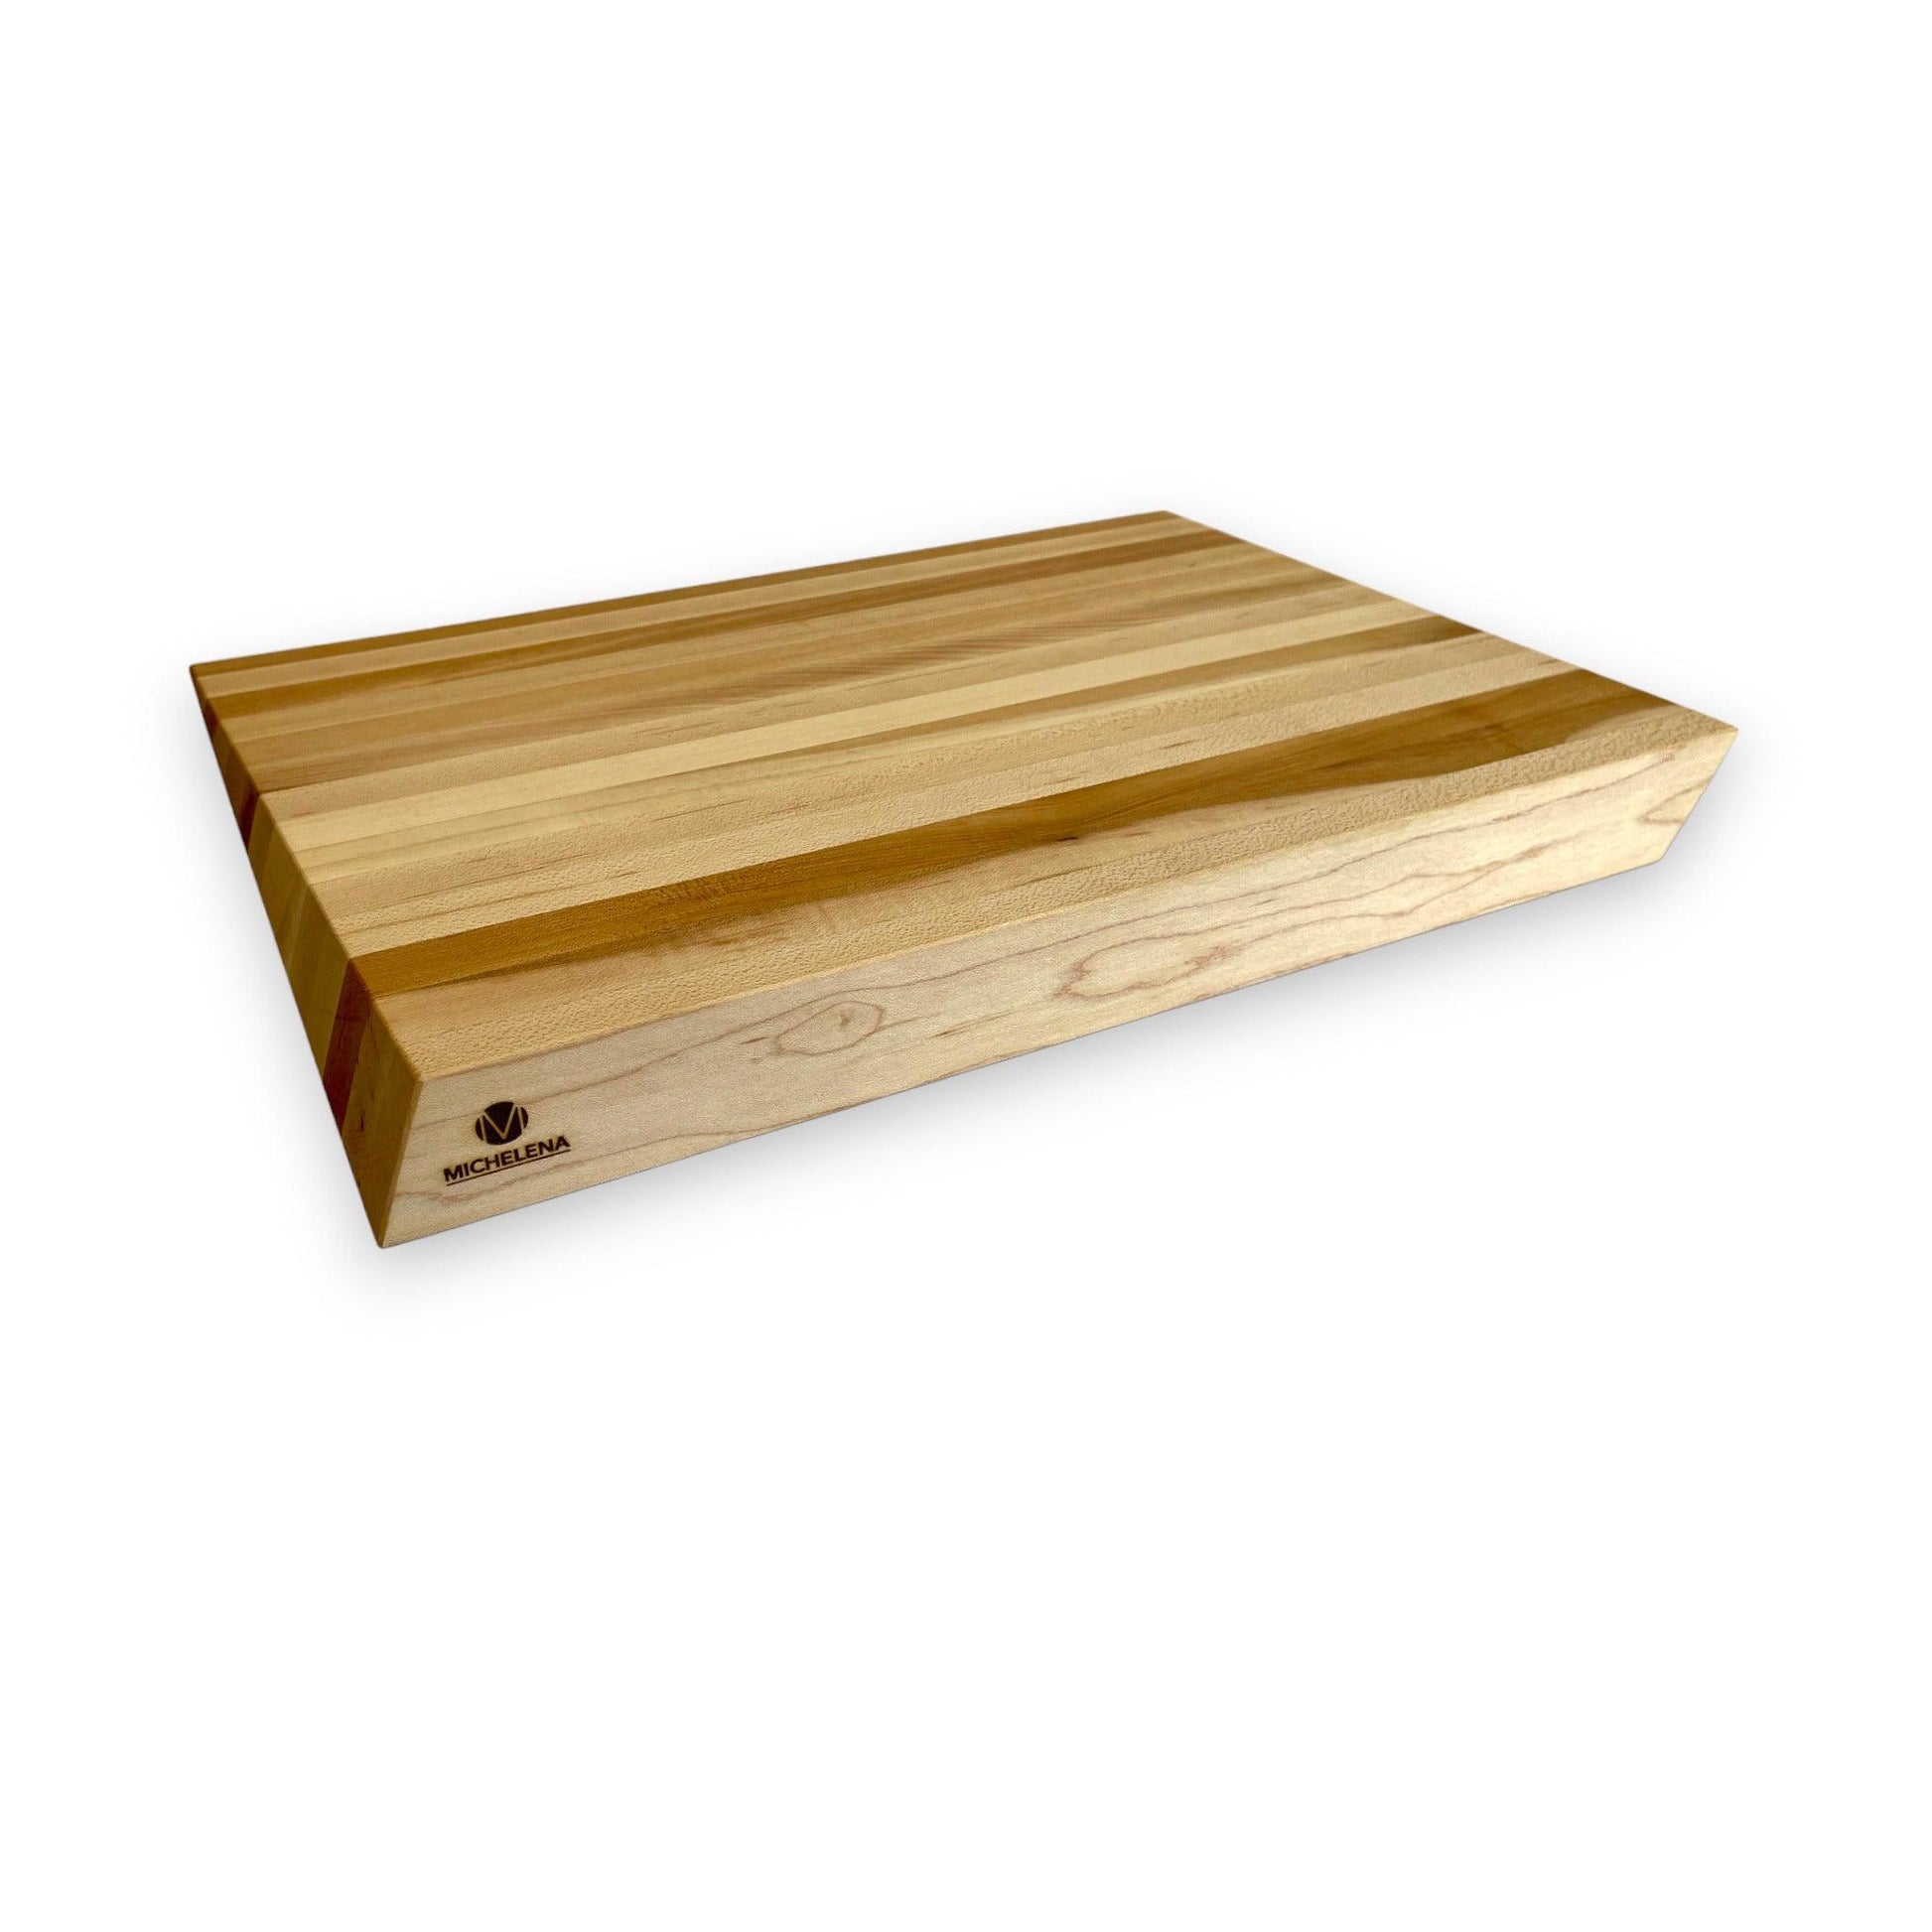 2" Cherry Wood Z-shaped cutting board - BOISWOOD